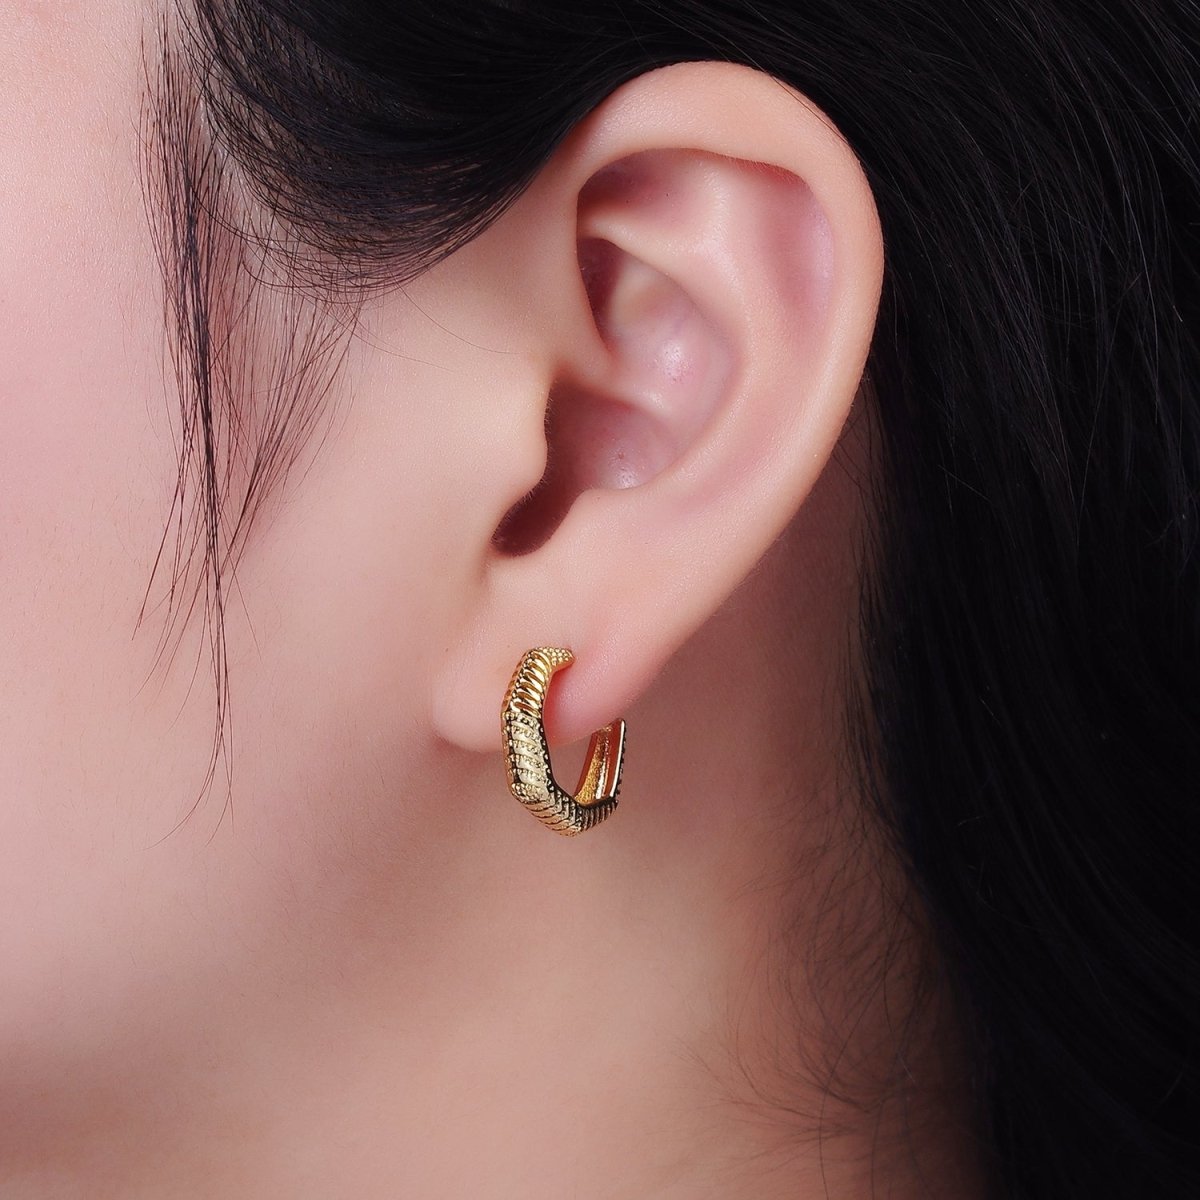 14K Gold Filled 18mm Open Textured Geometric C-Shaped Hoop Earrings | AB1117 - DLUXCA